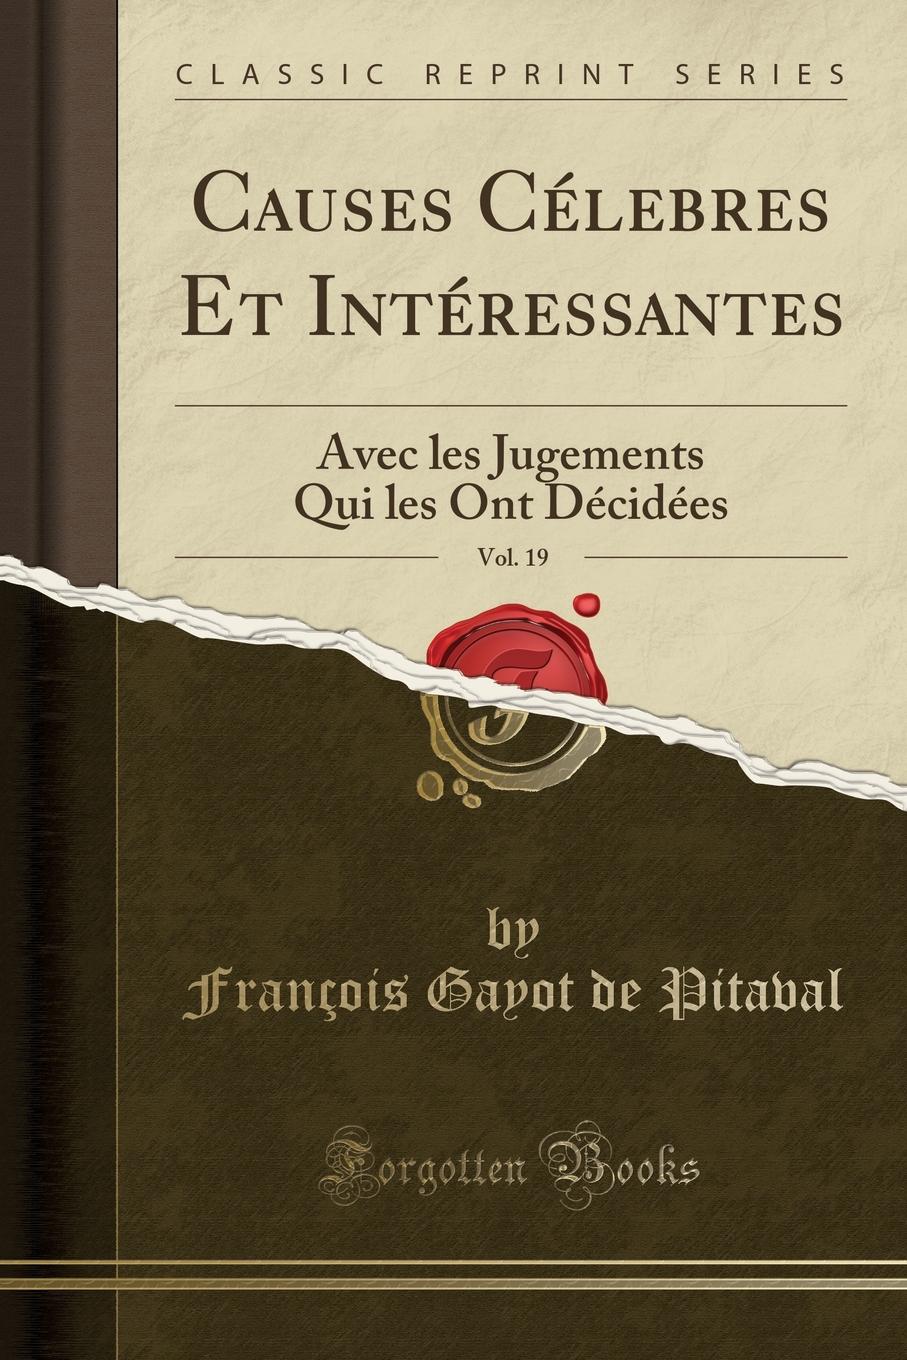 François Gayot de Pitaval Causes Celebres Et Interessantes, Vol. 19. Avec les Jugements Qui les Ont Decidees (Classic Reprint)